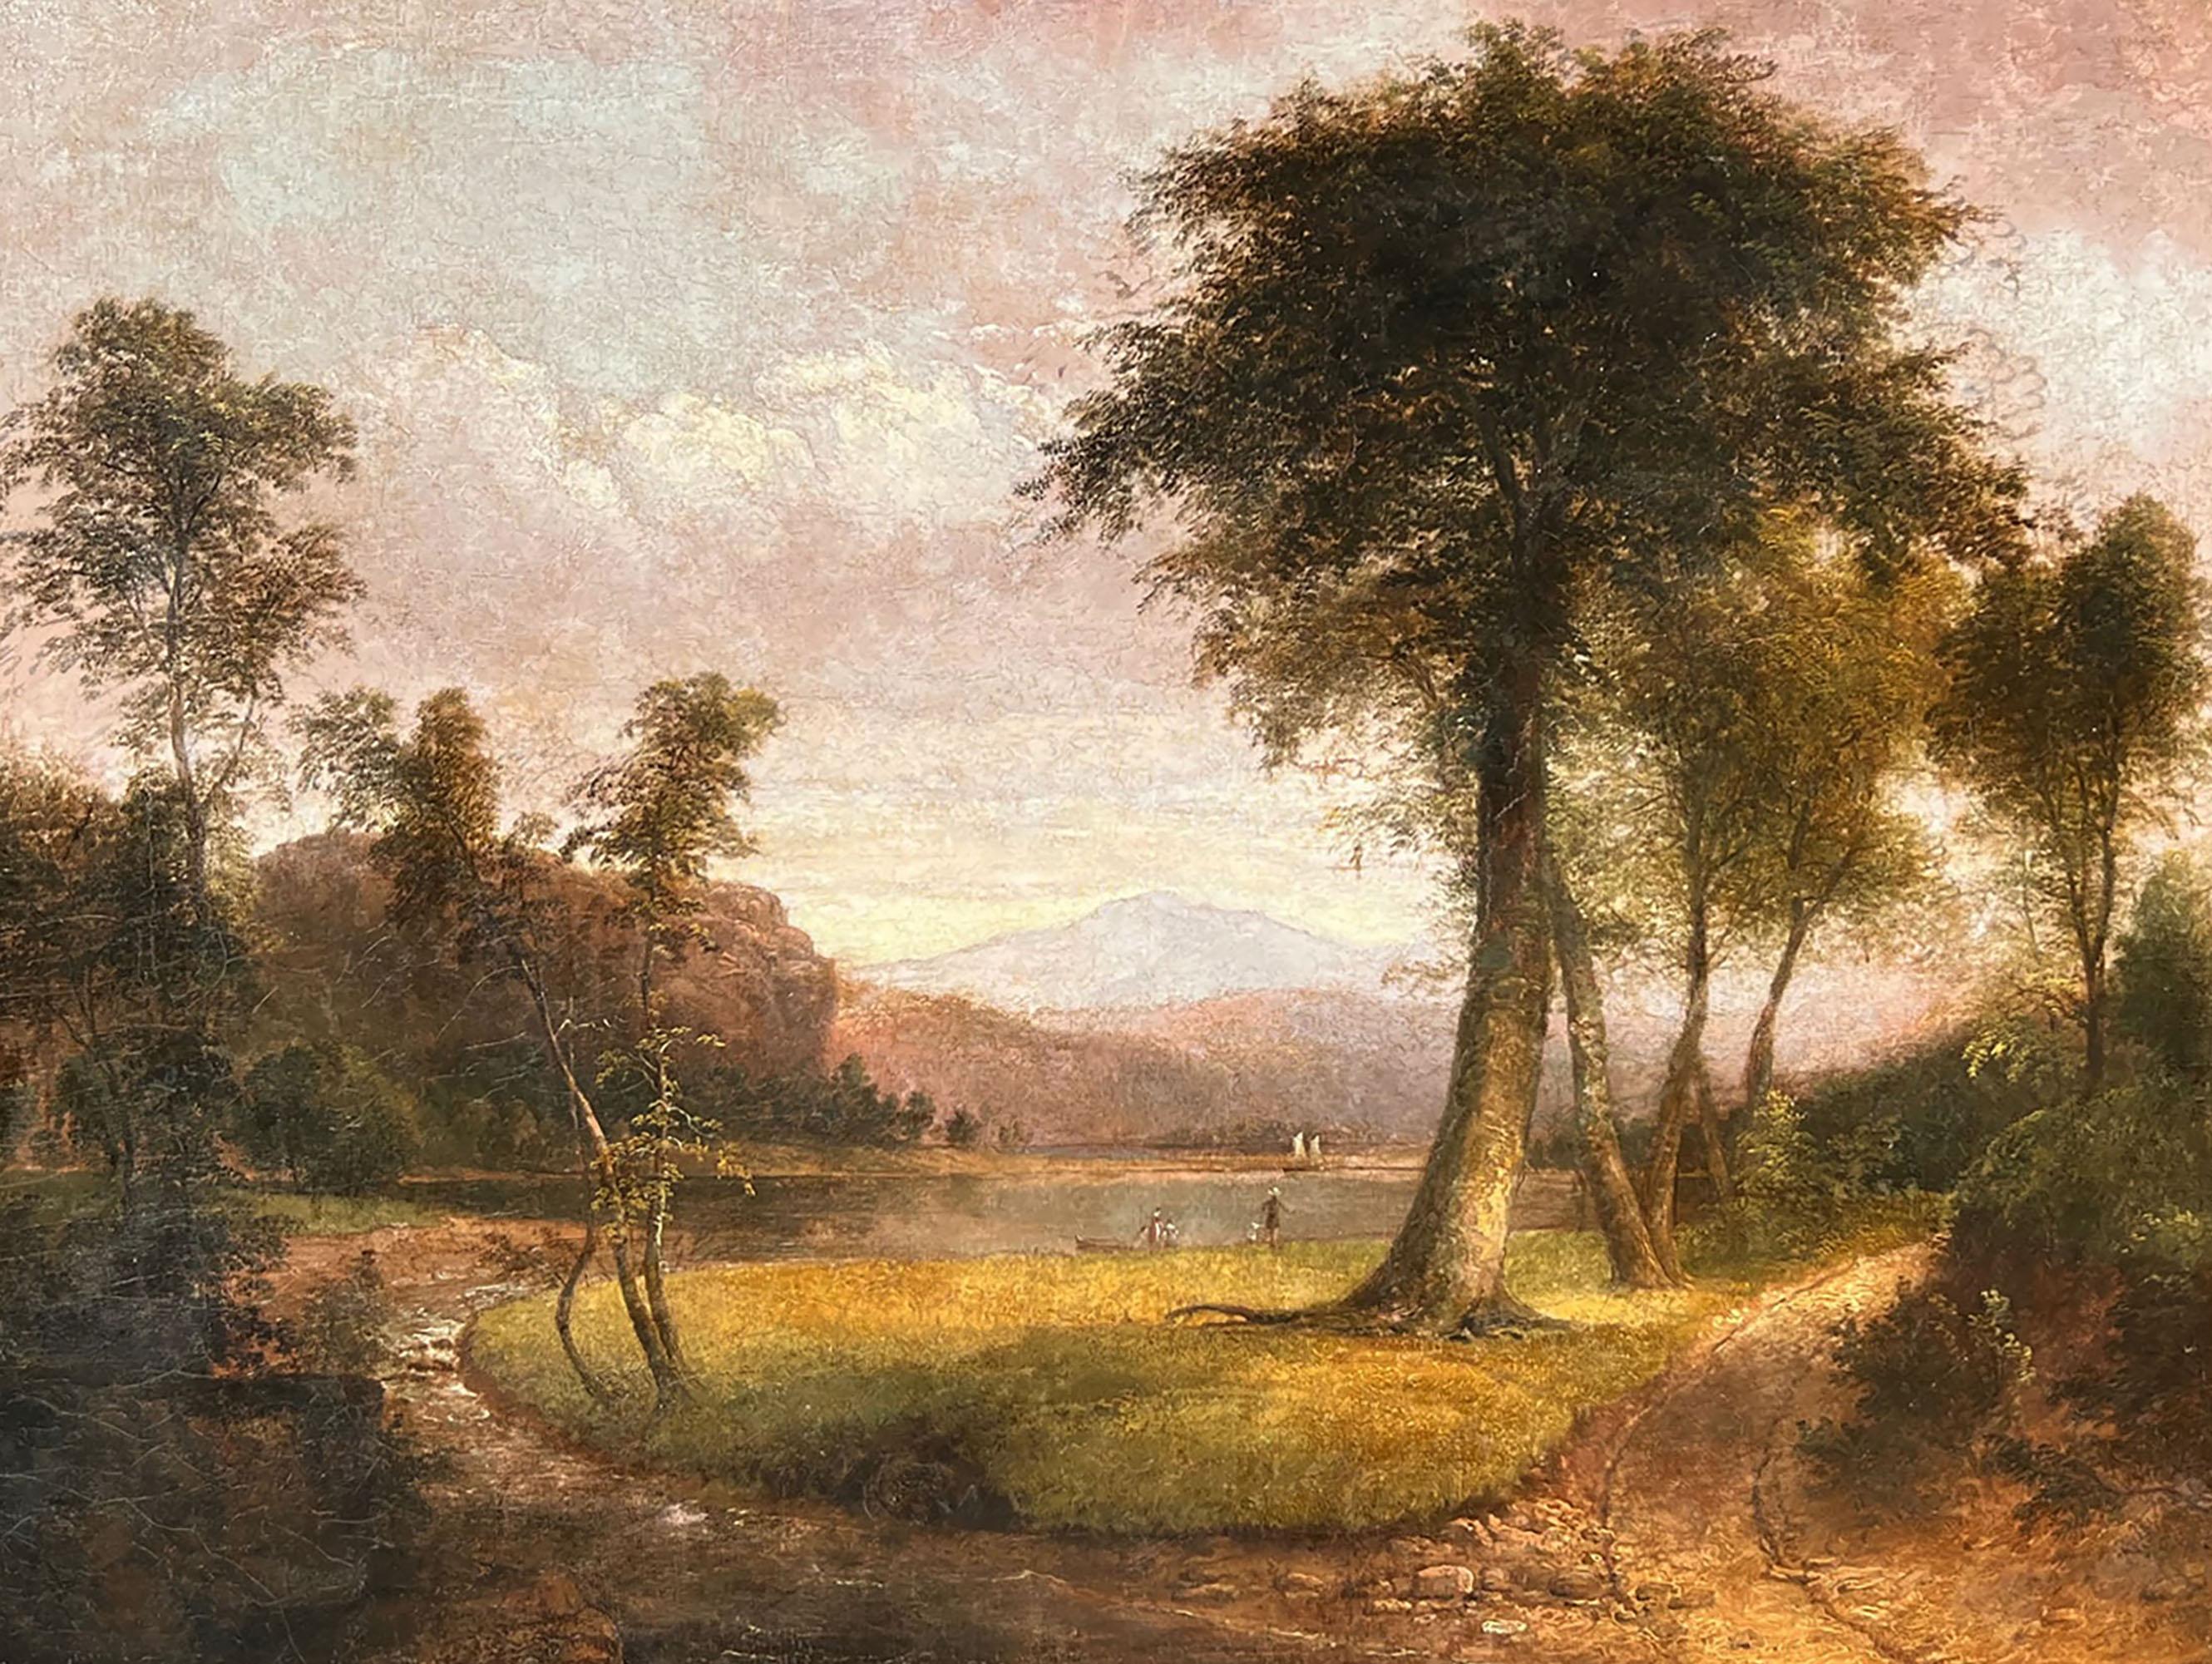 Catskill Landscape, 1836 by Thomas Doughty (American, 1793-1856) 1